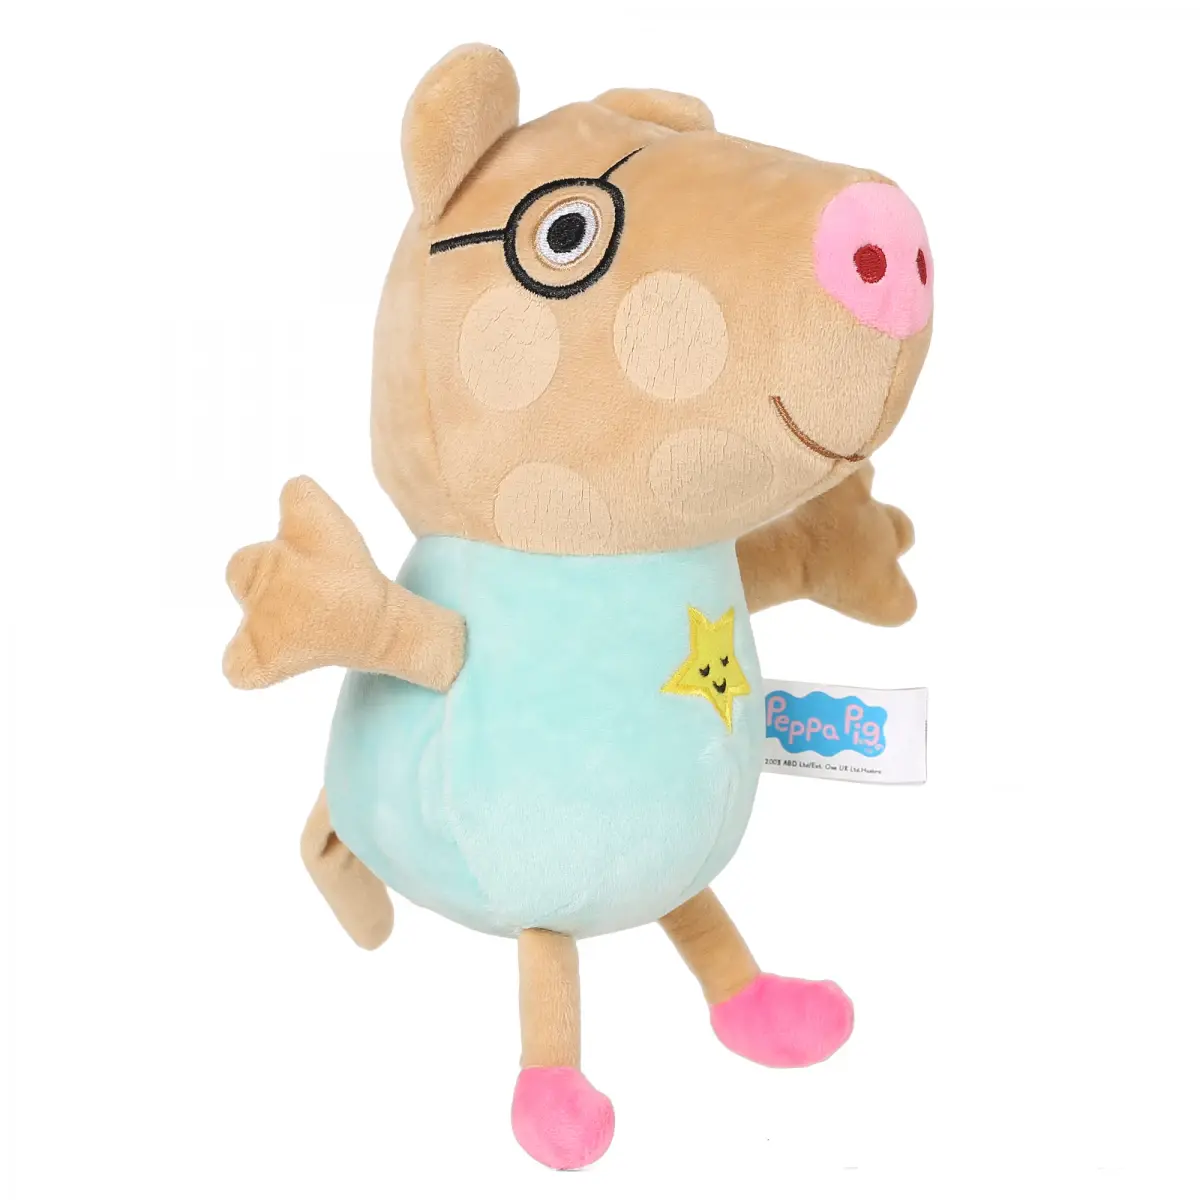 Peppa Pig Pedro Pony Soft Toy for Kids, 30cm, 18M+, Multicolour